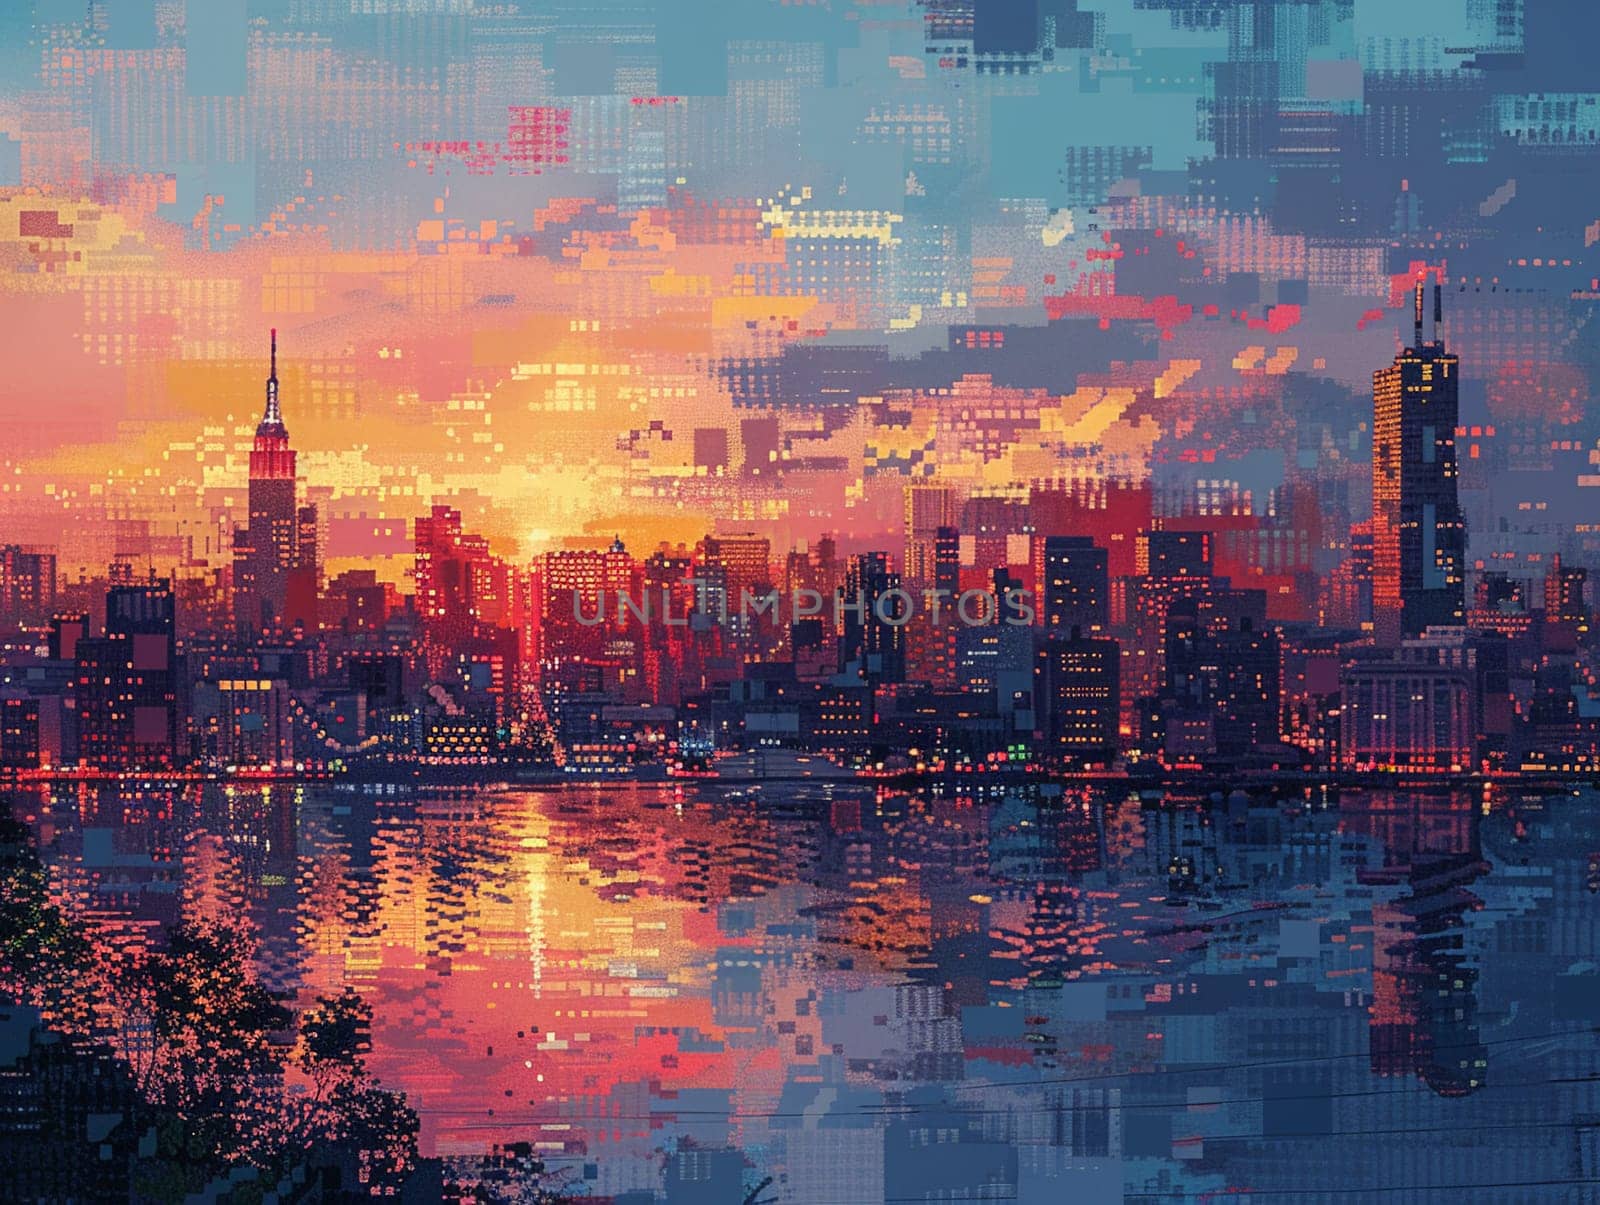 Pixelated Urban Skyline Evoking Retro Video Games by Benzoix